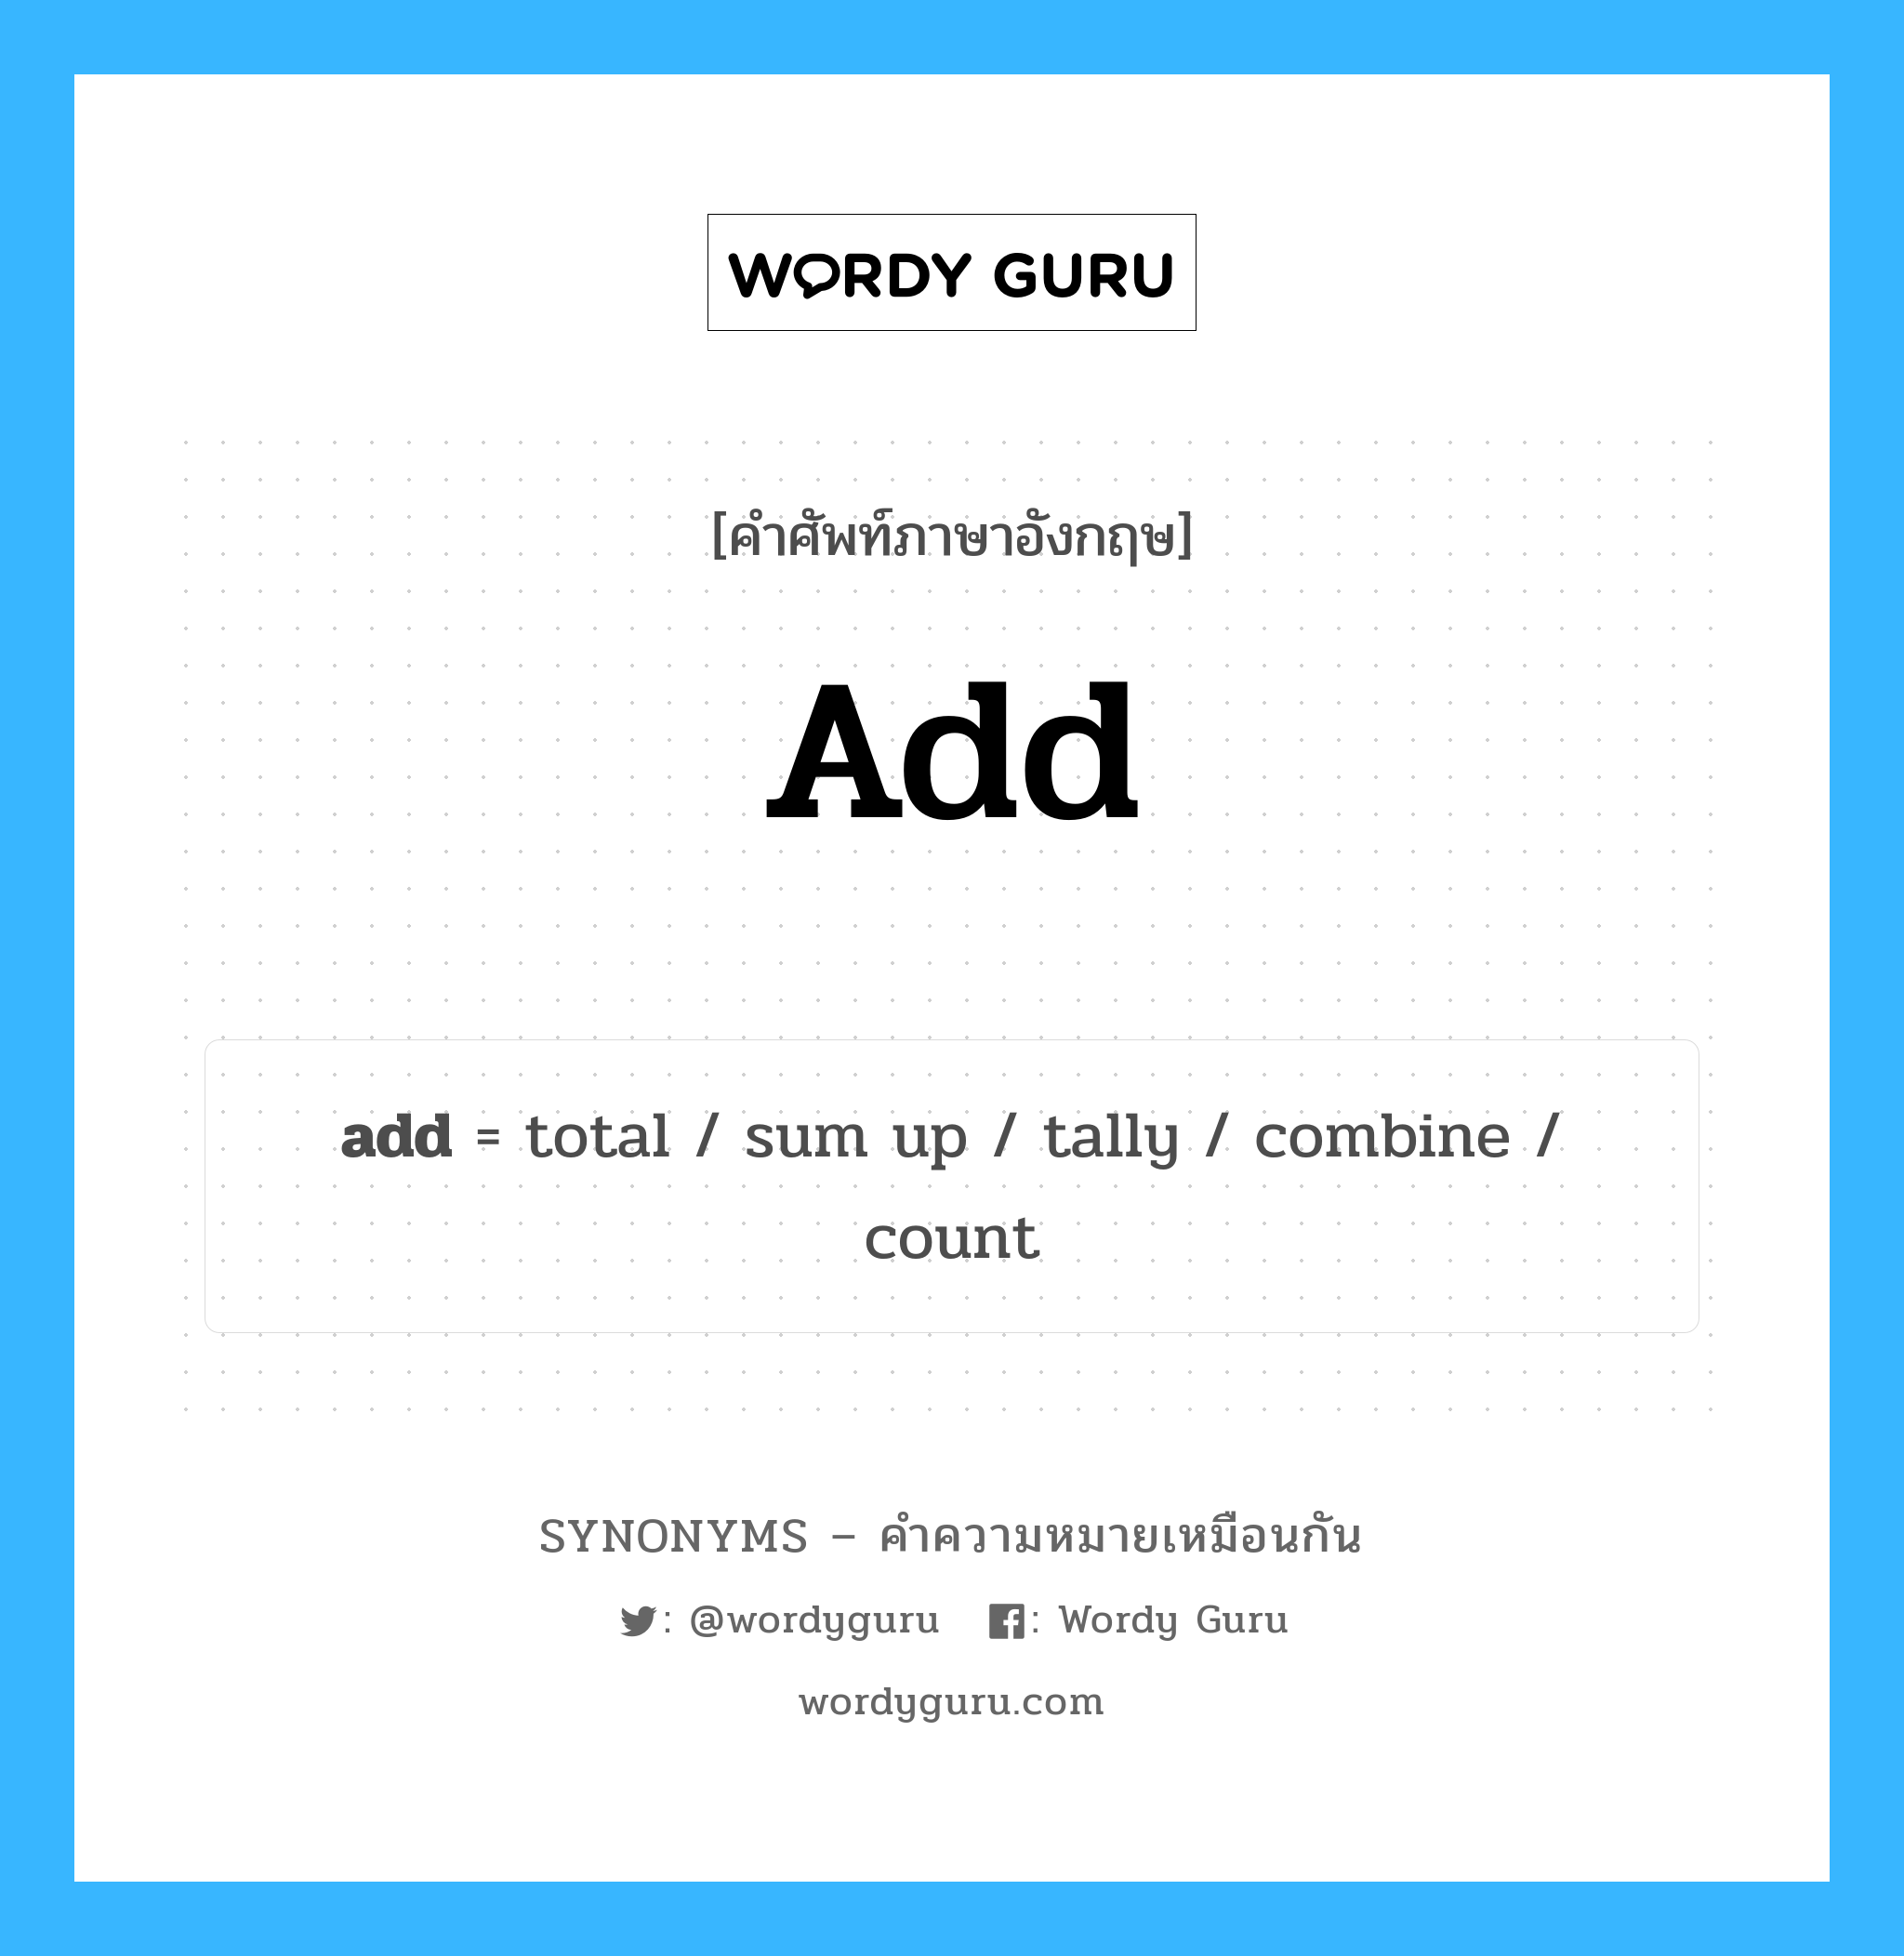 sum up เป็นหนึ่งใน add และมีคำอื่น ๆ อีกดังนี้, คำศัพท์ภาษาอังกฤษ sum up ความหมายคล้ายกันกับ add แปลว่า รวม หมวด add